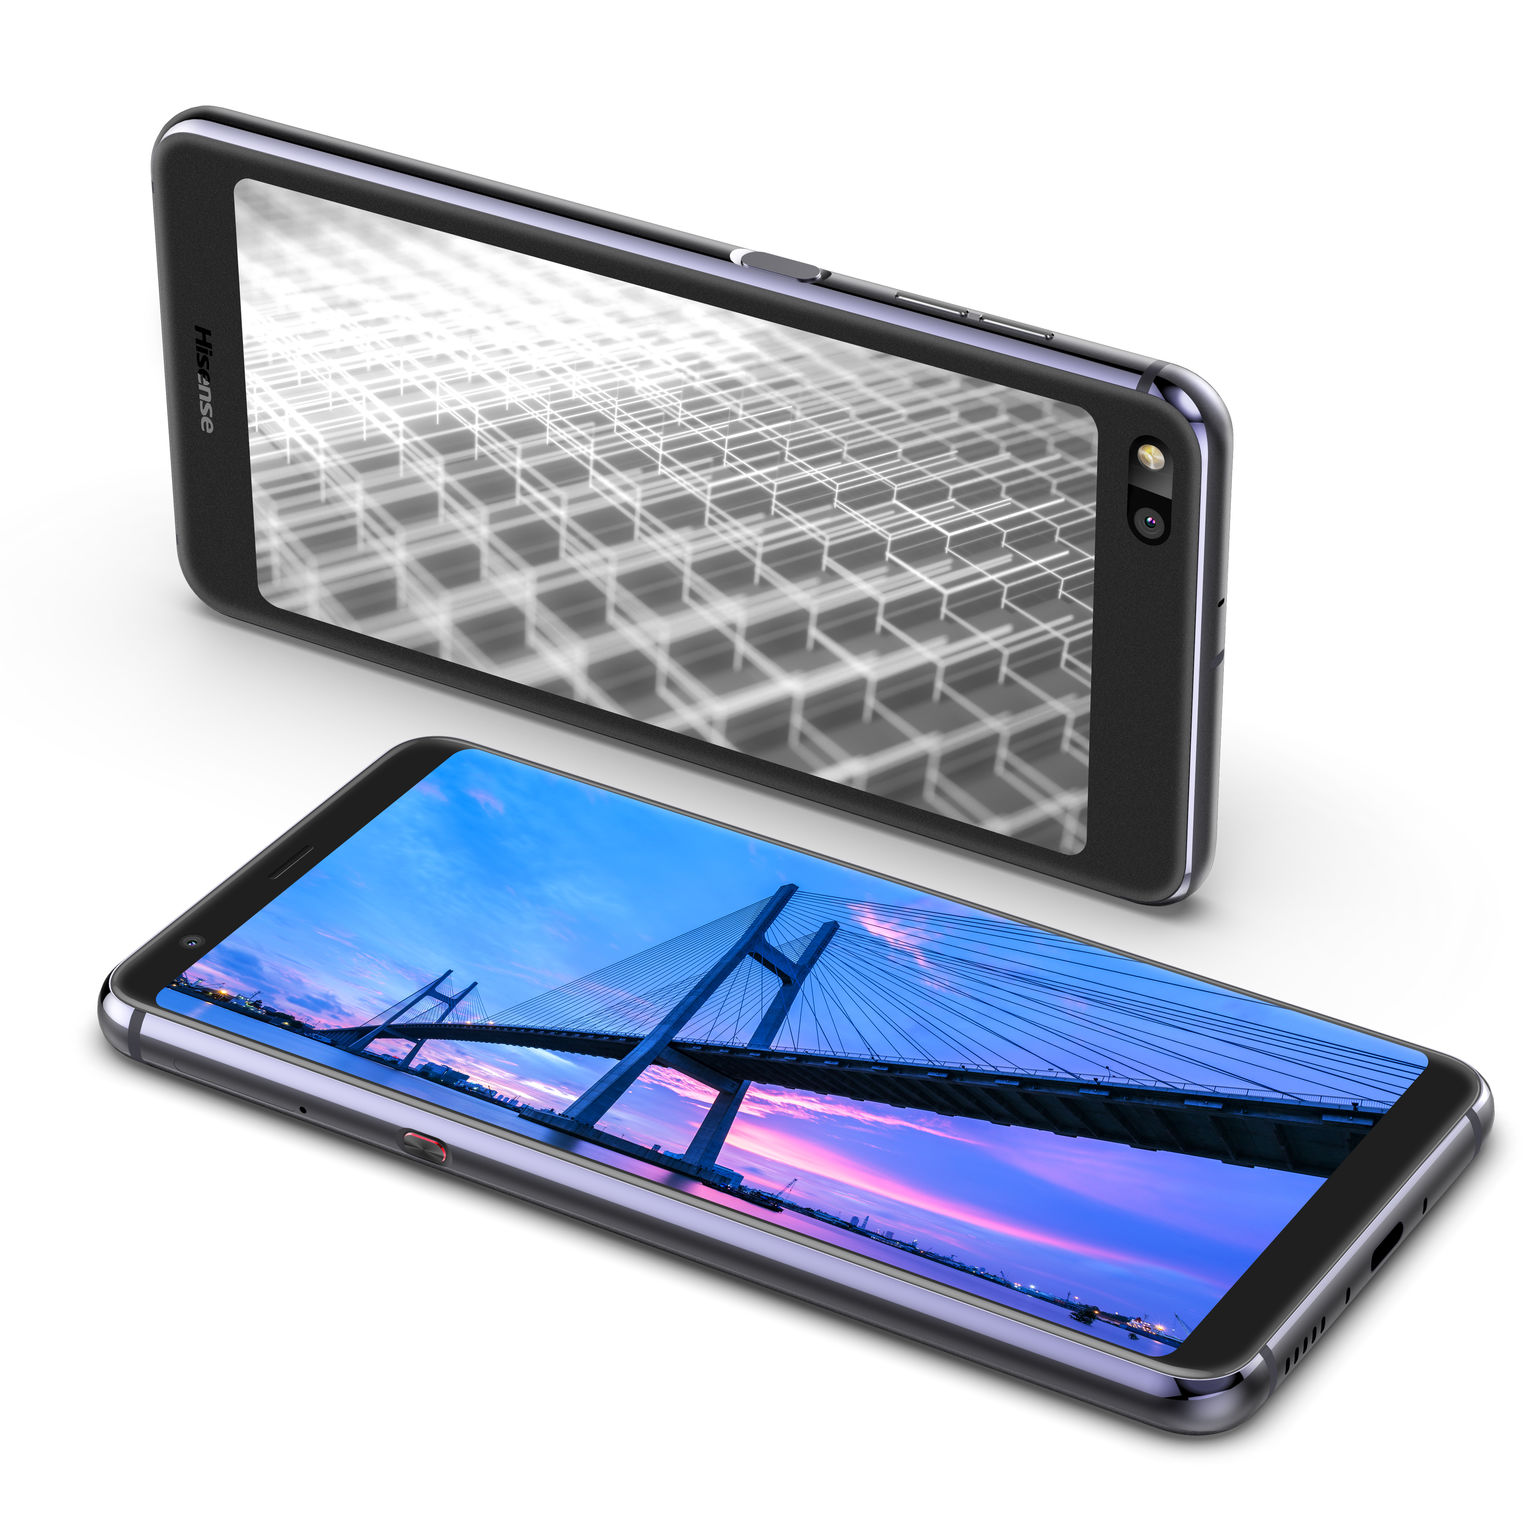 Hisense A6 dual screen smartphone